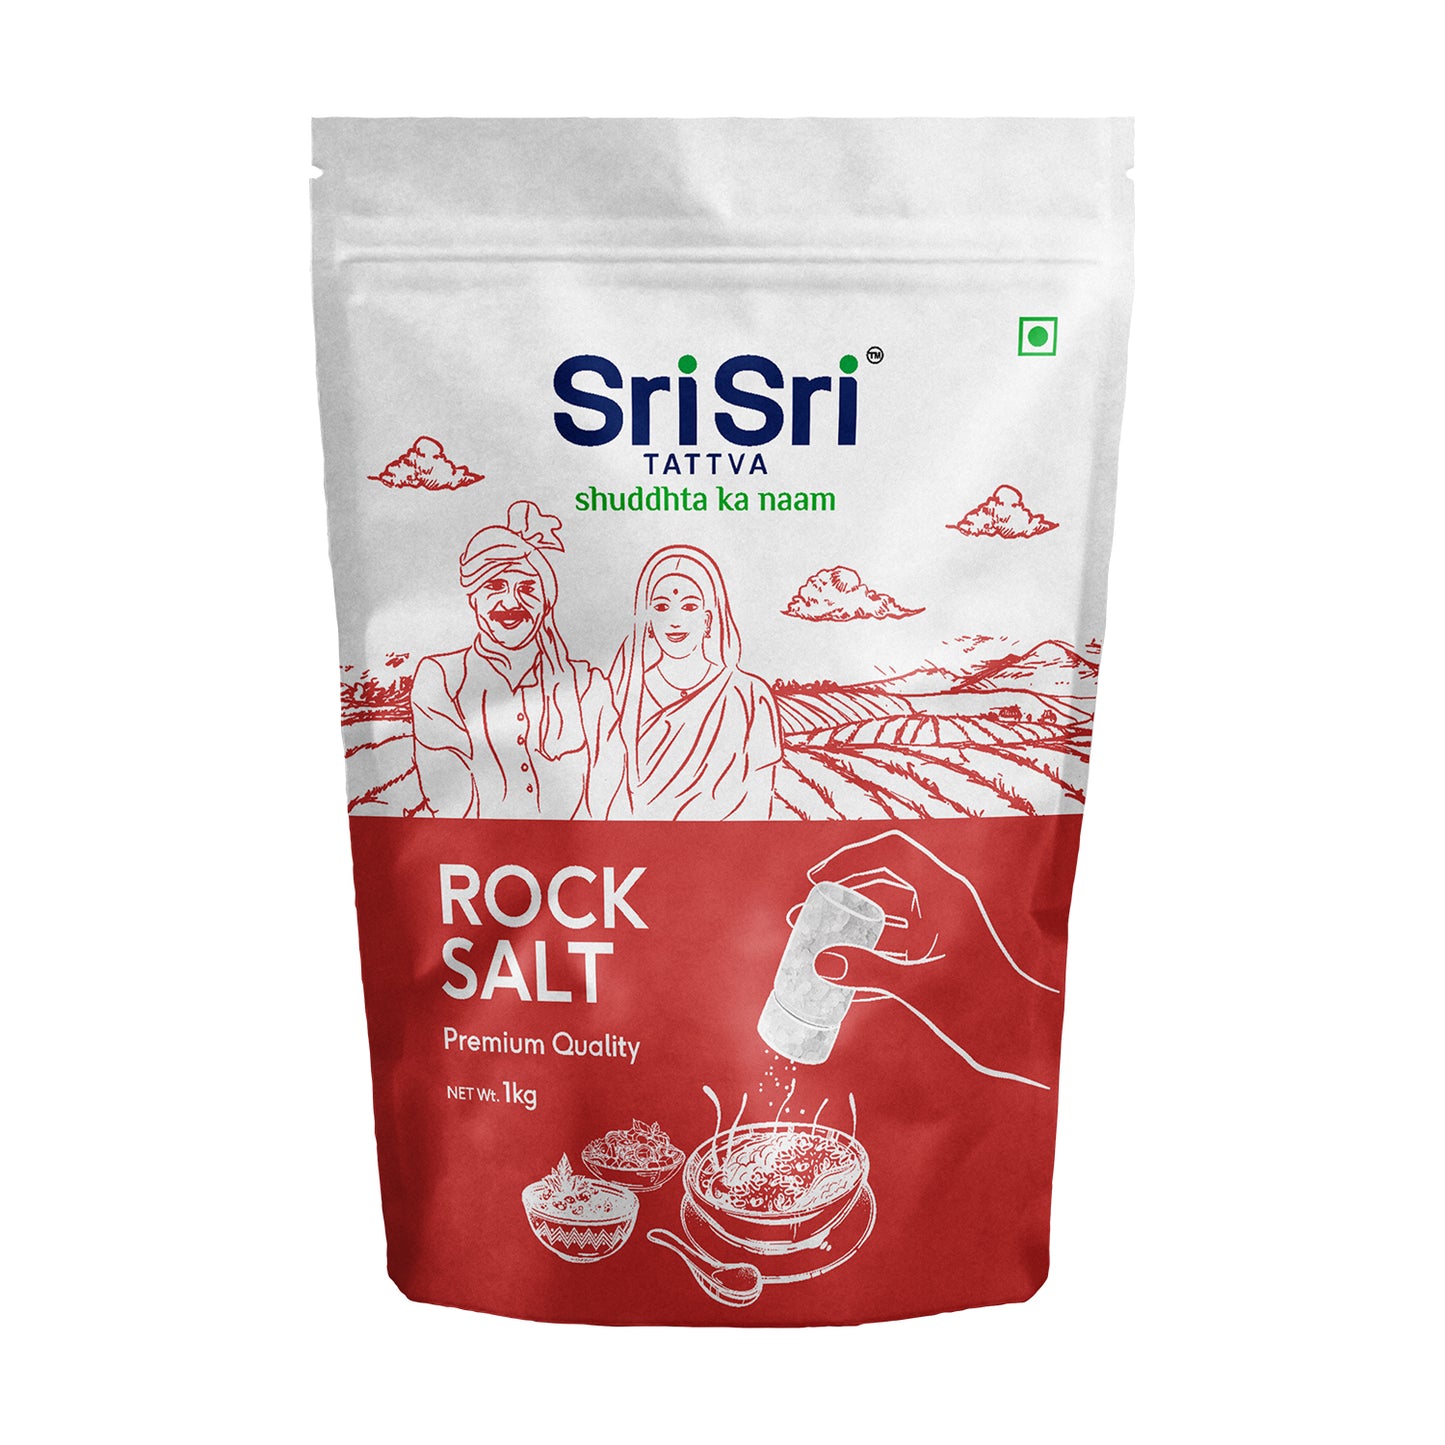 Rock Salt - Premium Quality, 1 kg